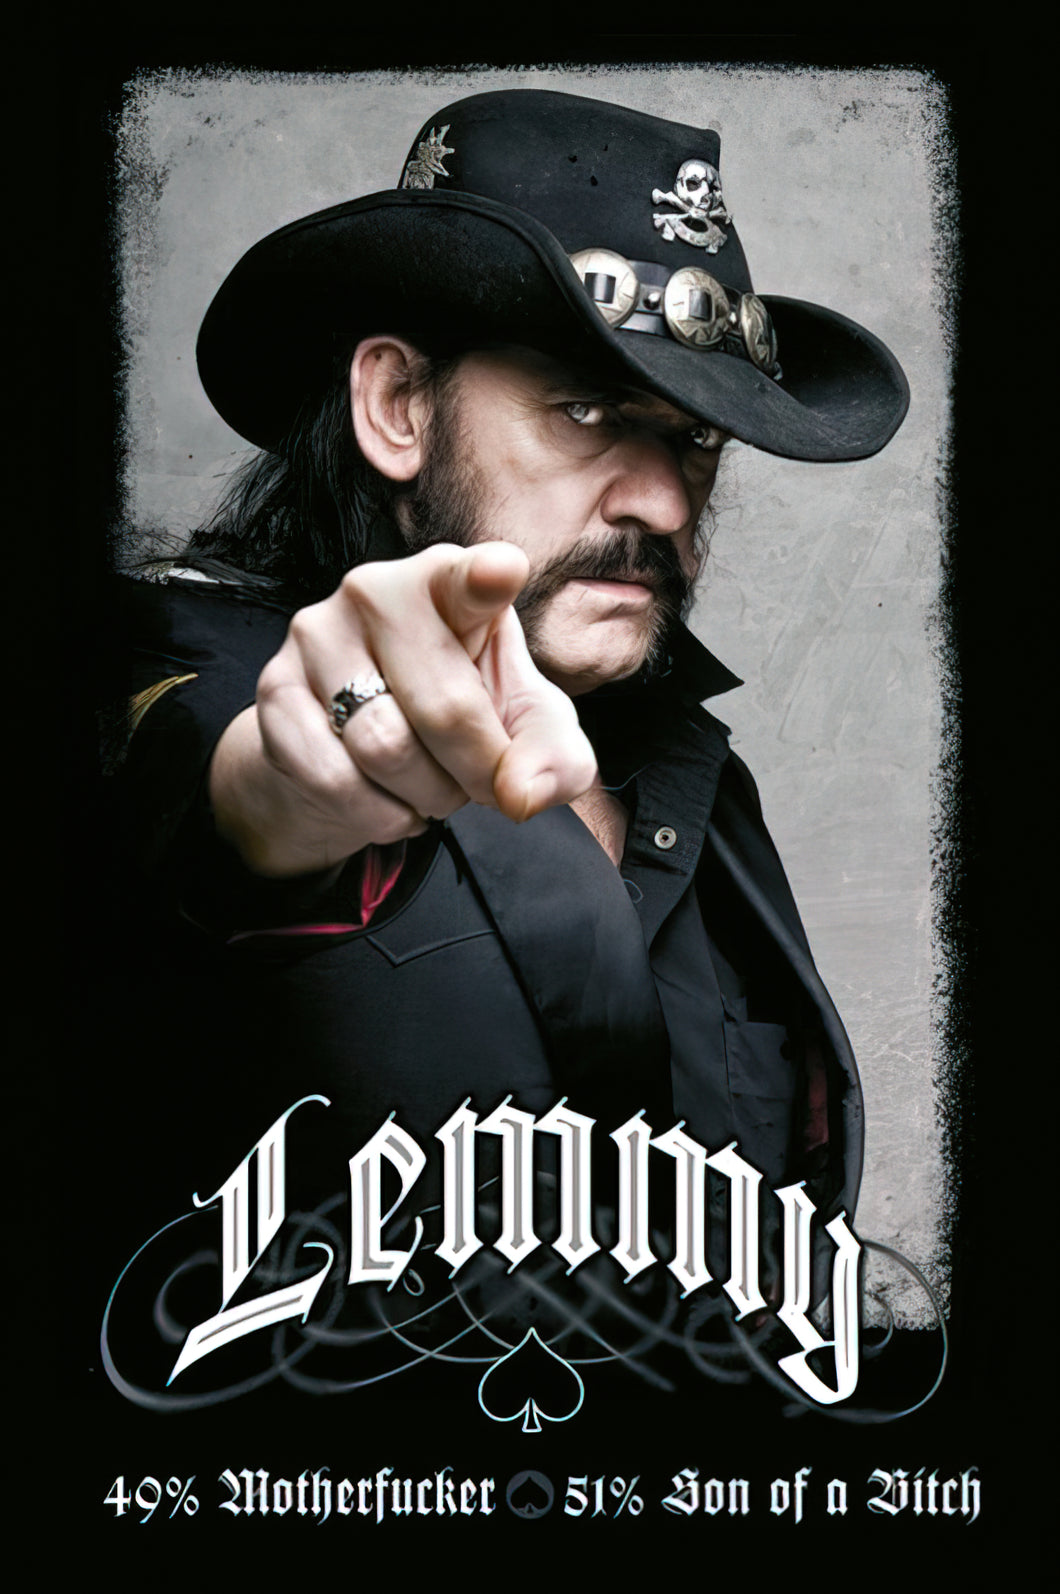 Motorhead - Lemmy Kilmister Poster Egoamo.co.za Posters 